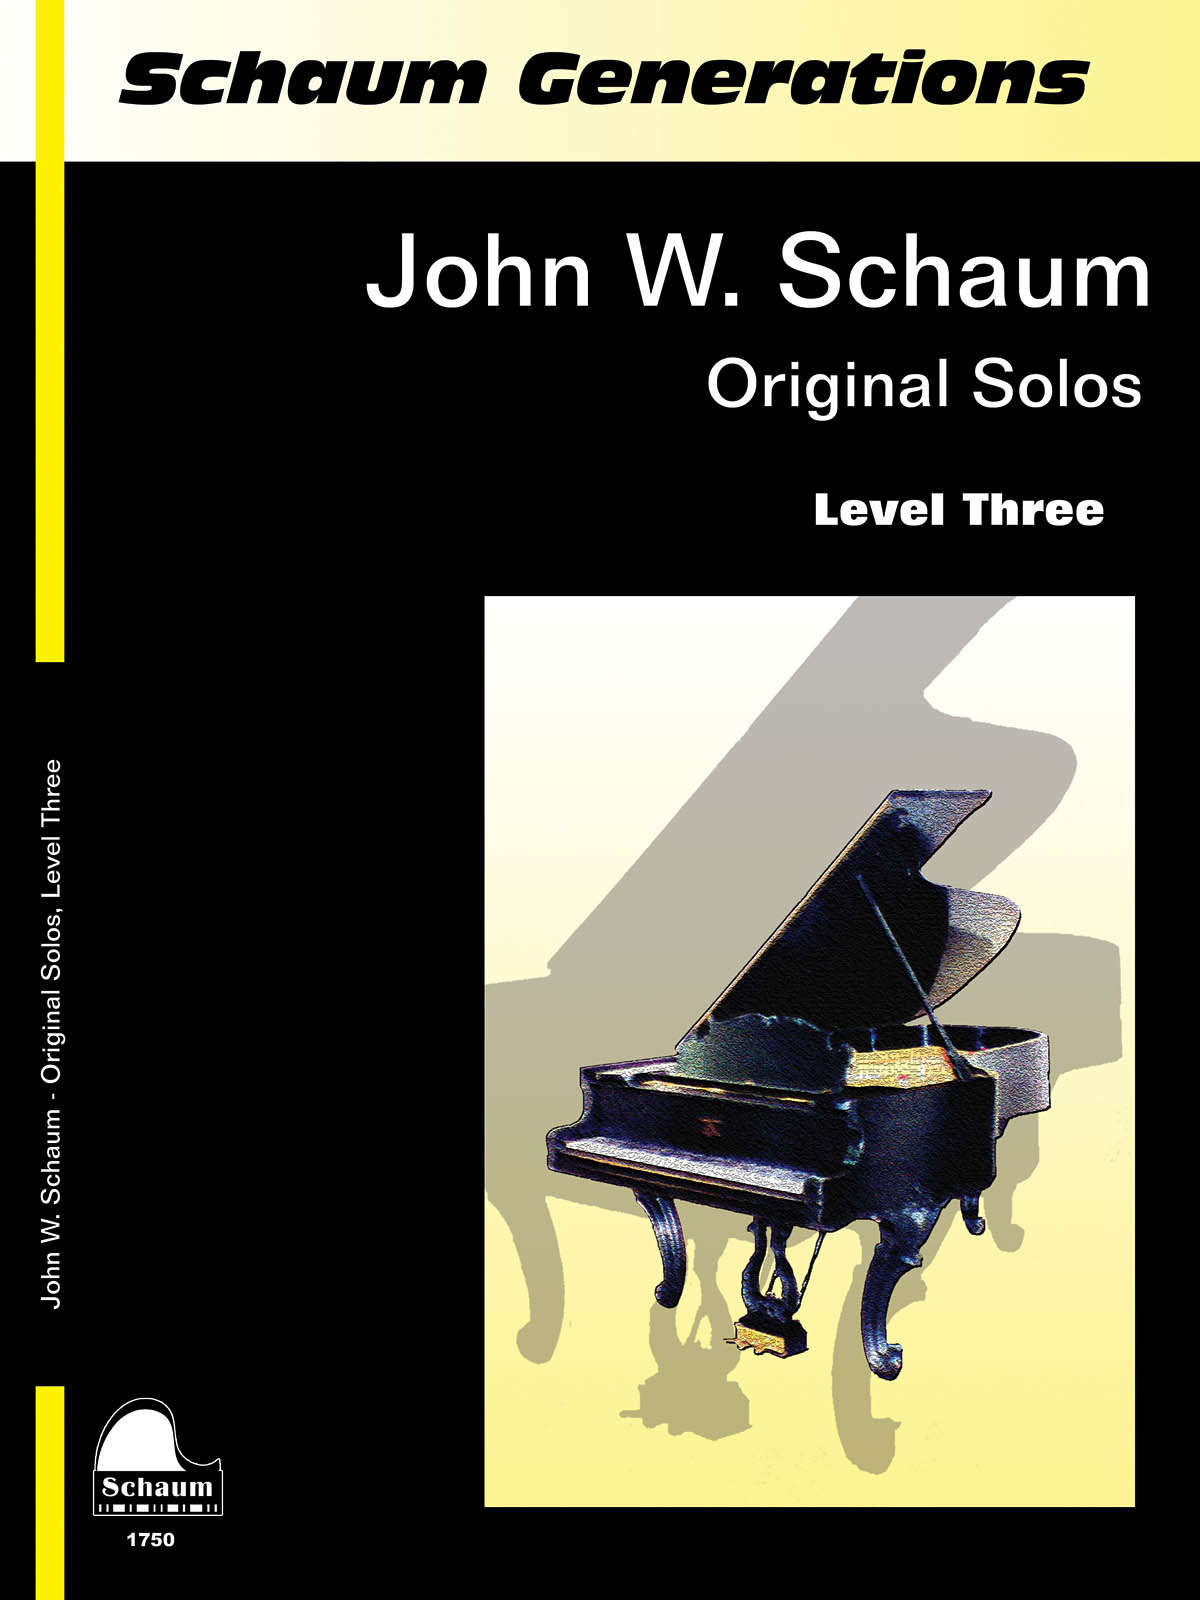 John W. Schaum: Generations: John W. Schaum Original Solos: Piano: Instrumental